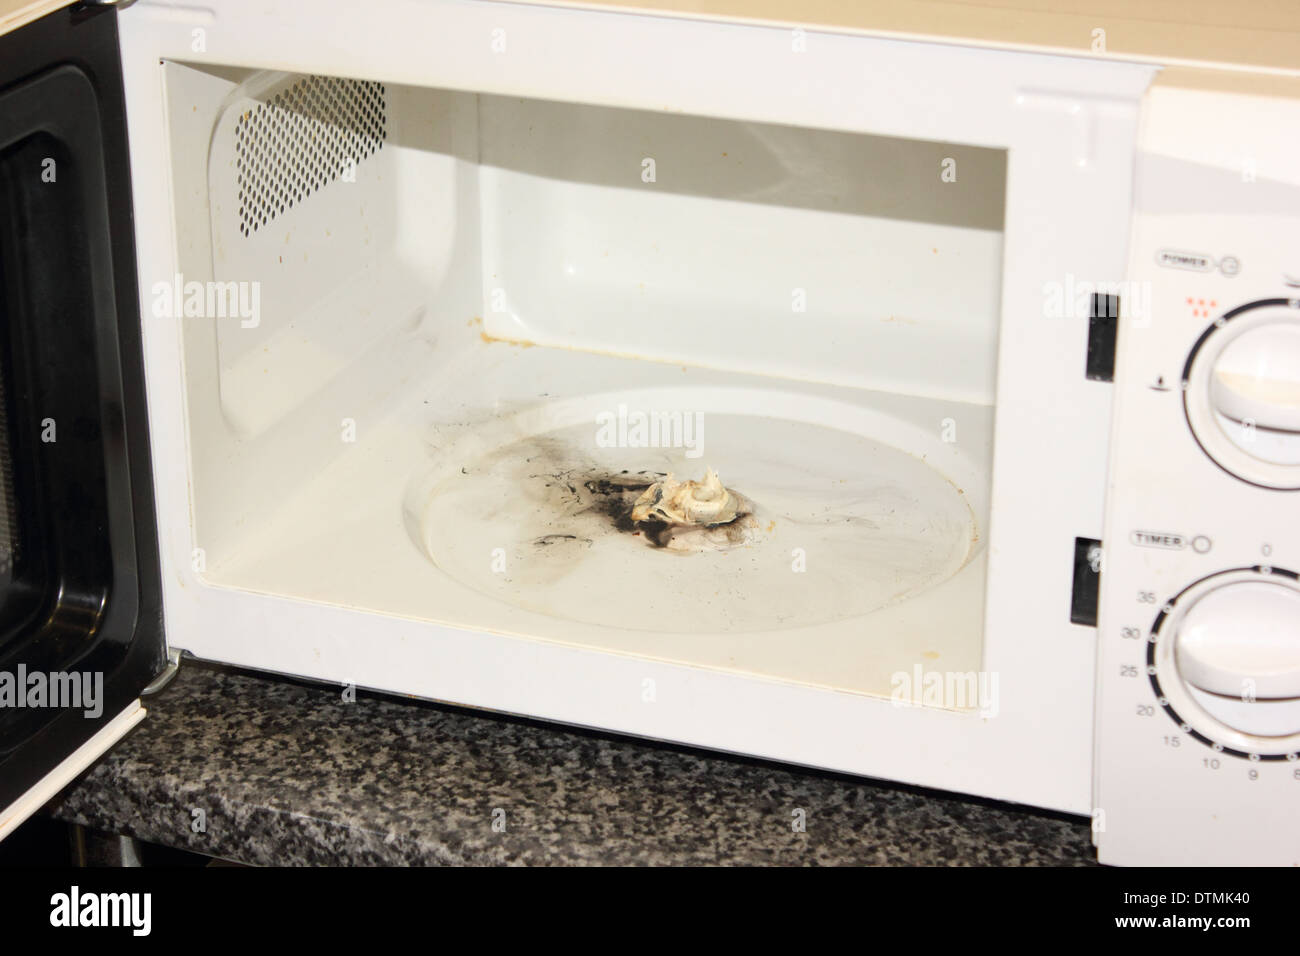 https://c8.alamy.com/comp/DTMK40/a-microwave-that-caught-on-fire-DTMK40.jpg